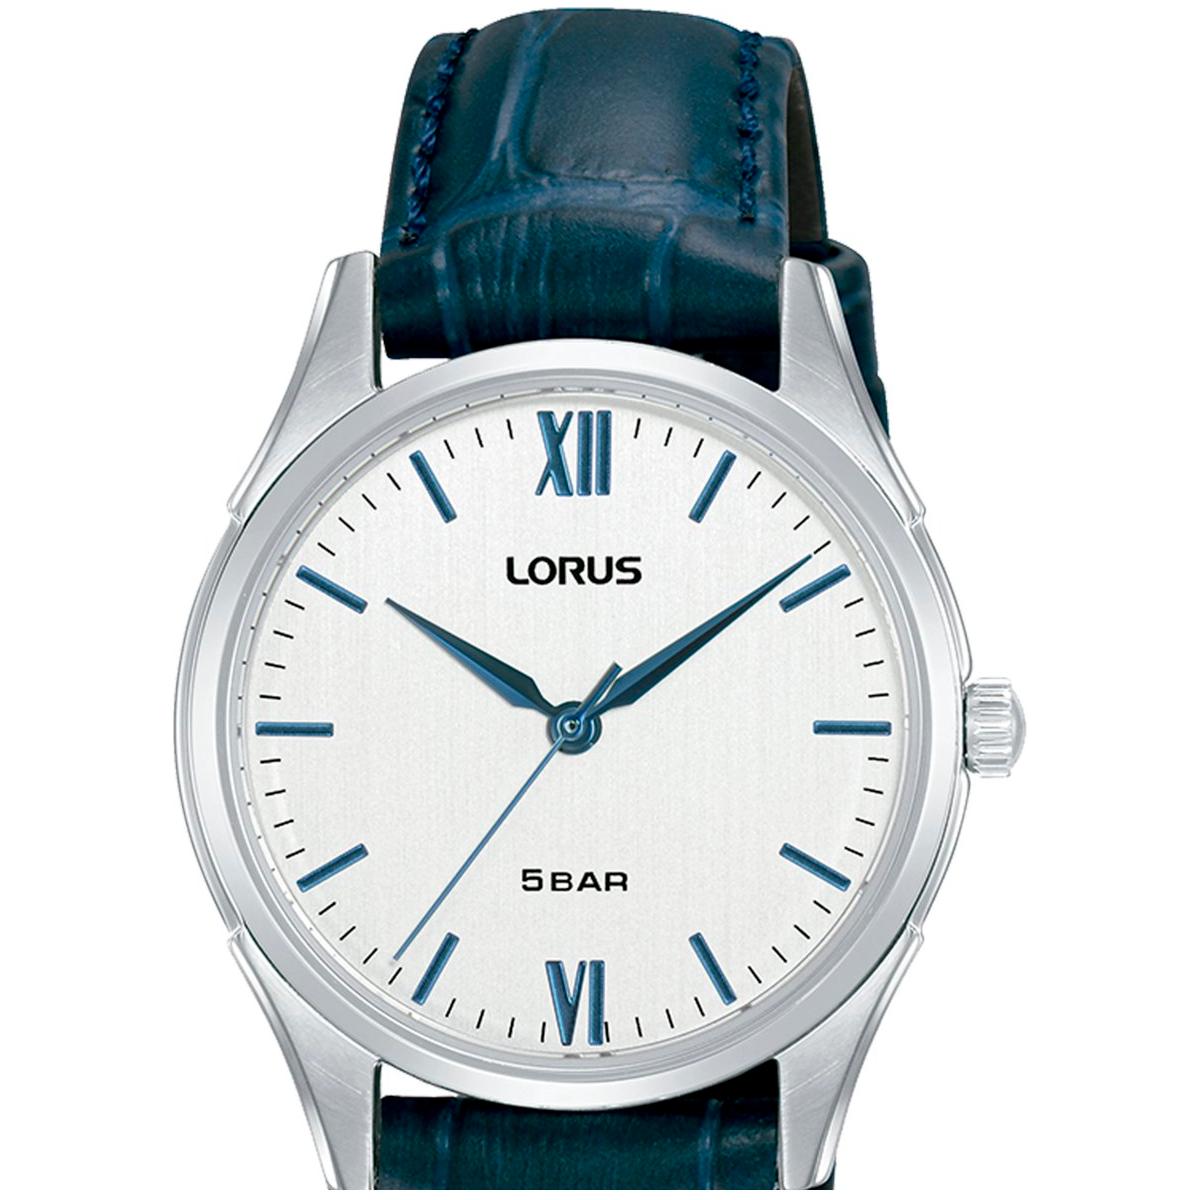 LORUS LORUS WATCHES Mod. RG281VX9 WATCHES lorus-watches-mod-rg281vx9